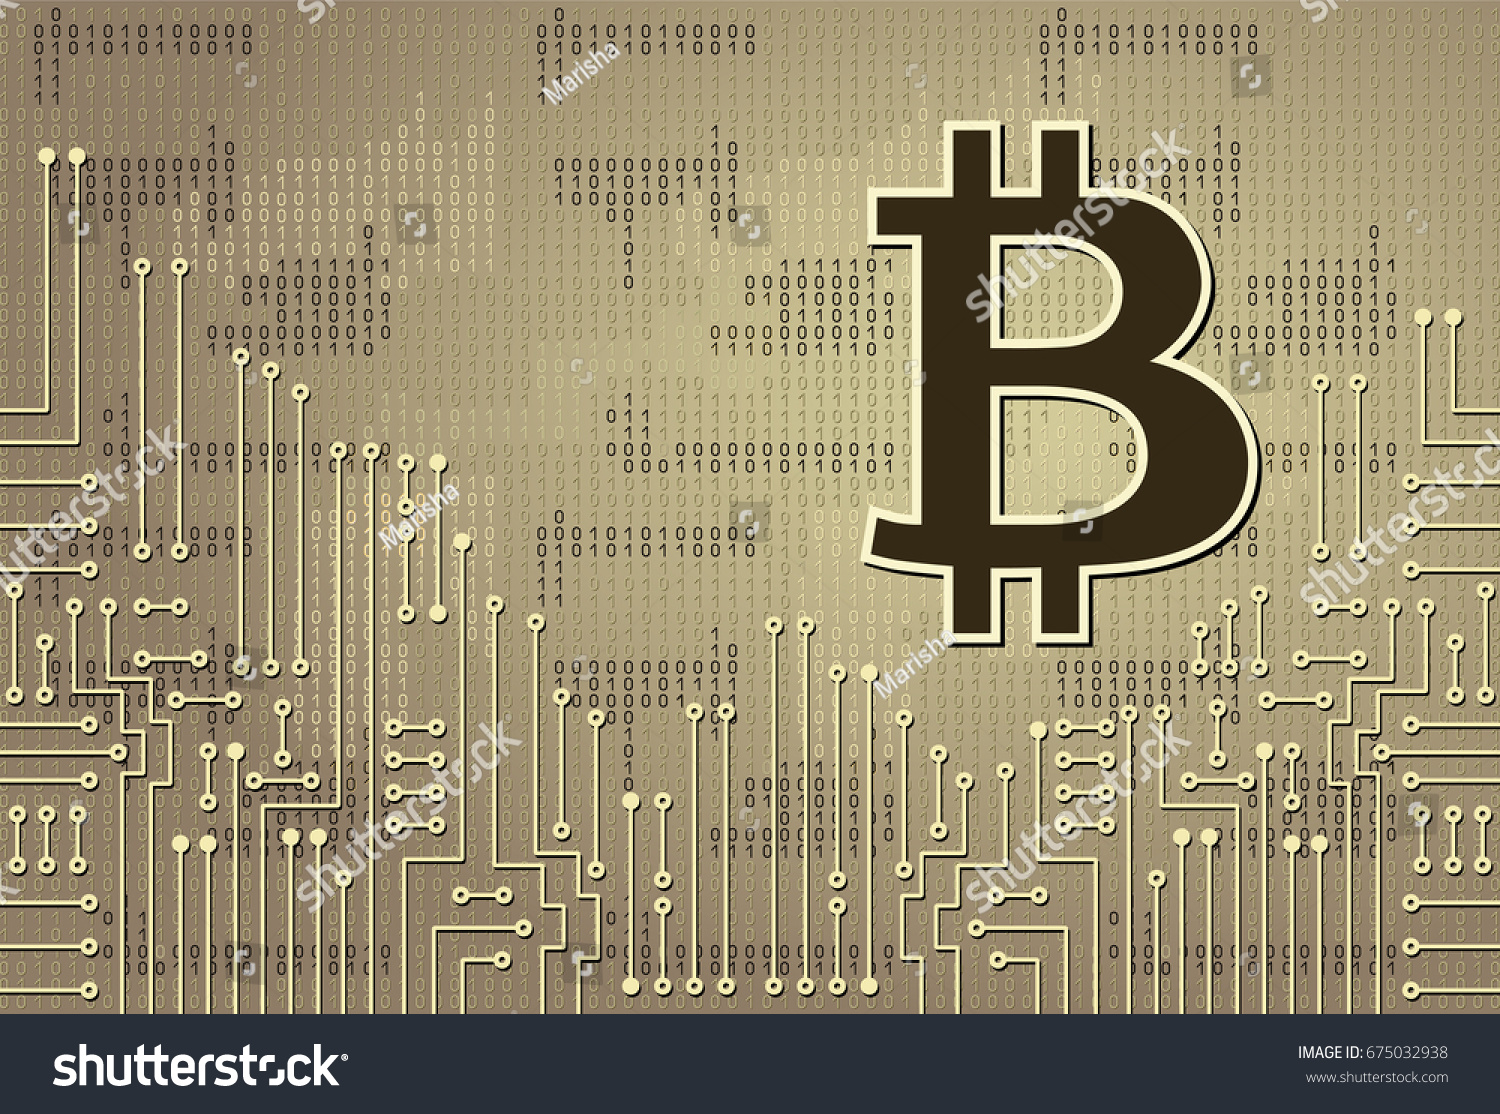 asic chip bitcoin mining